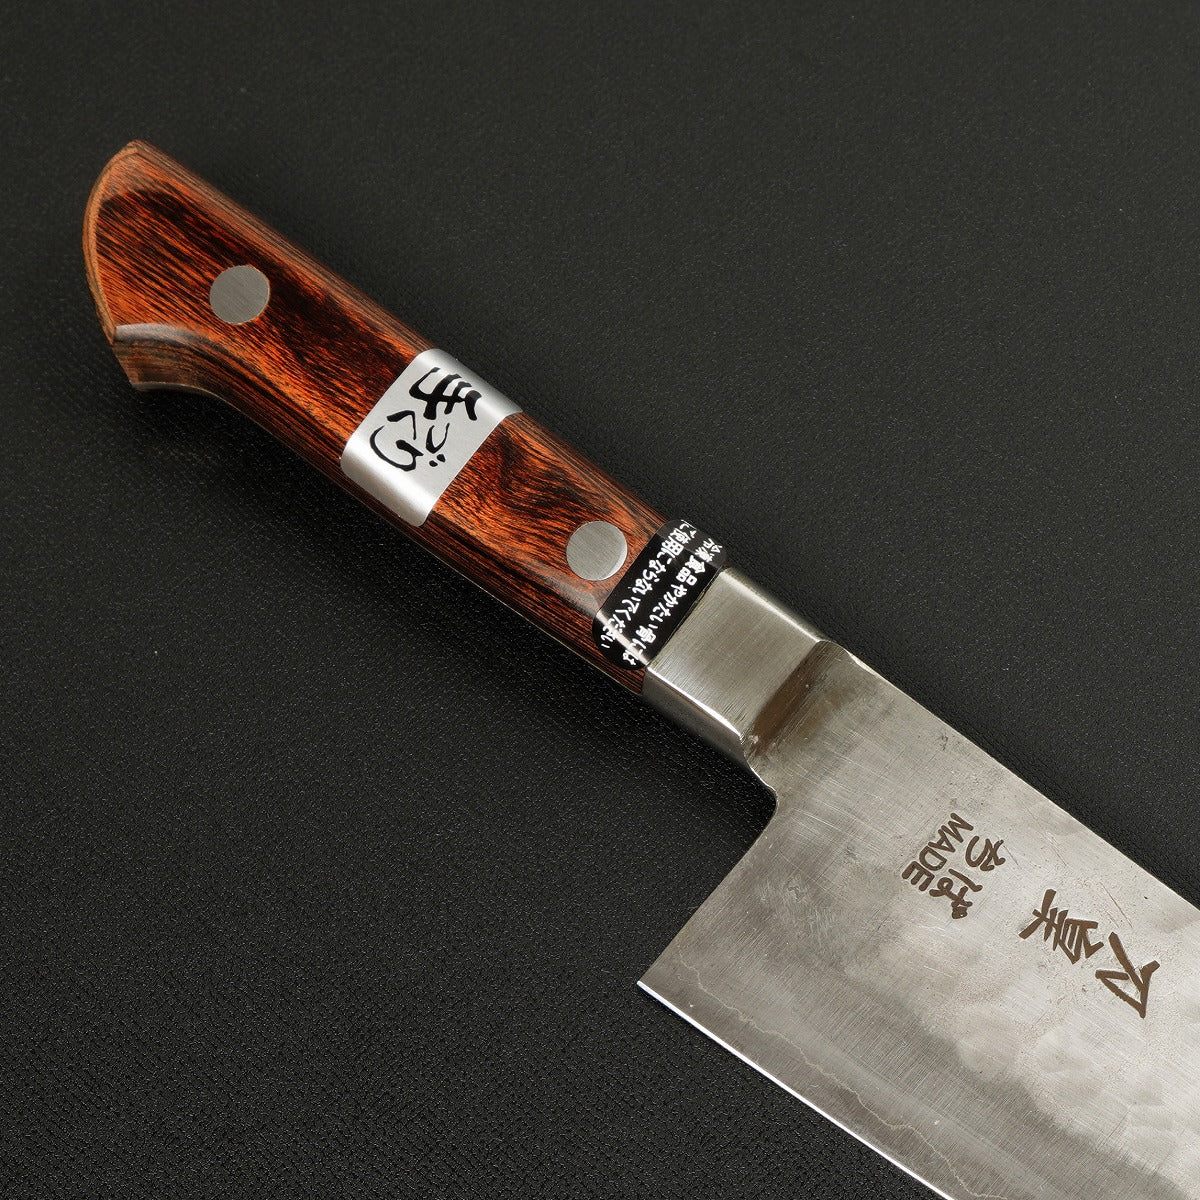 "TOHKO" Santoku (Multi-Purpose Knife) Shirogami Steel with Hammered patten,180mm